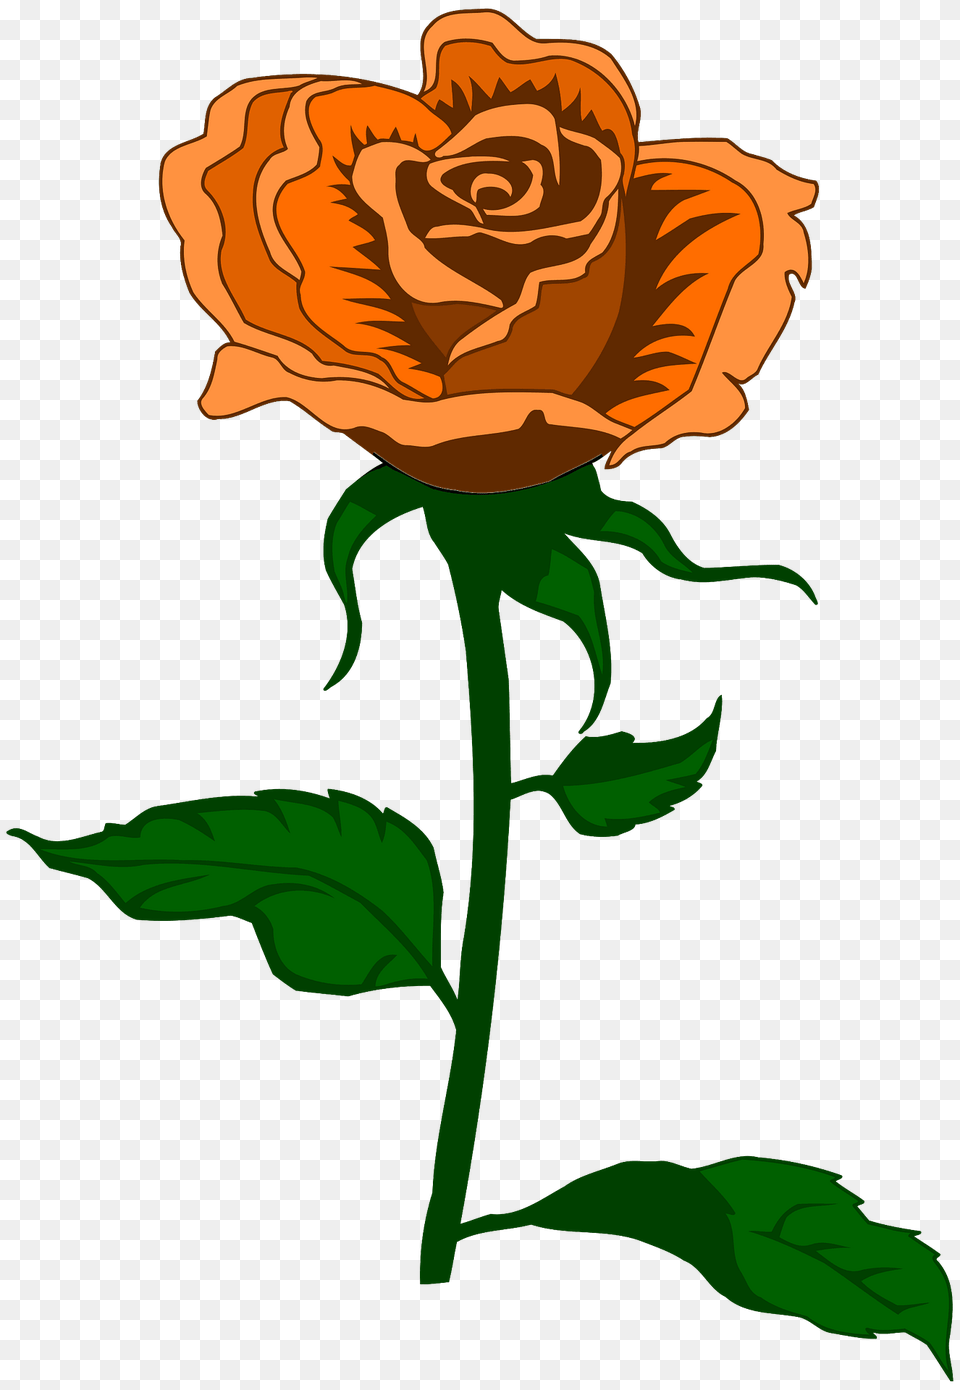 Orange Rose On The Stem Clipart, Flower, Plant Png